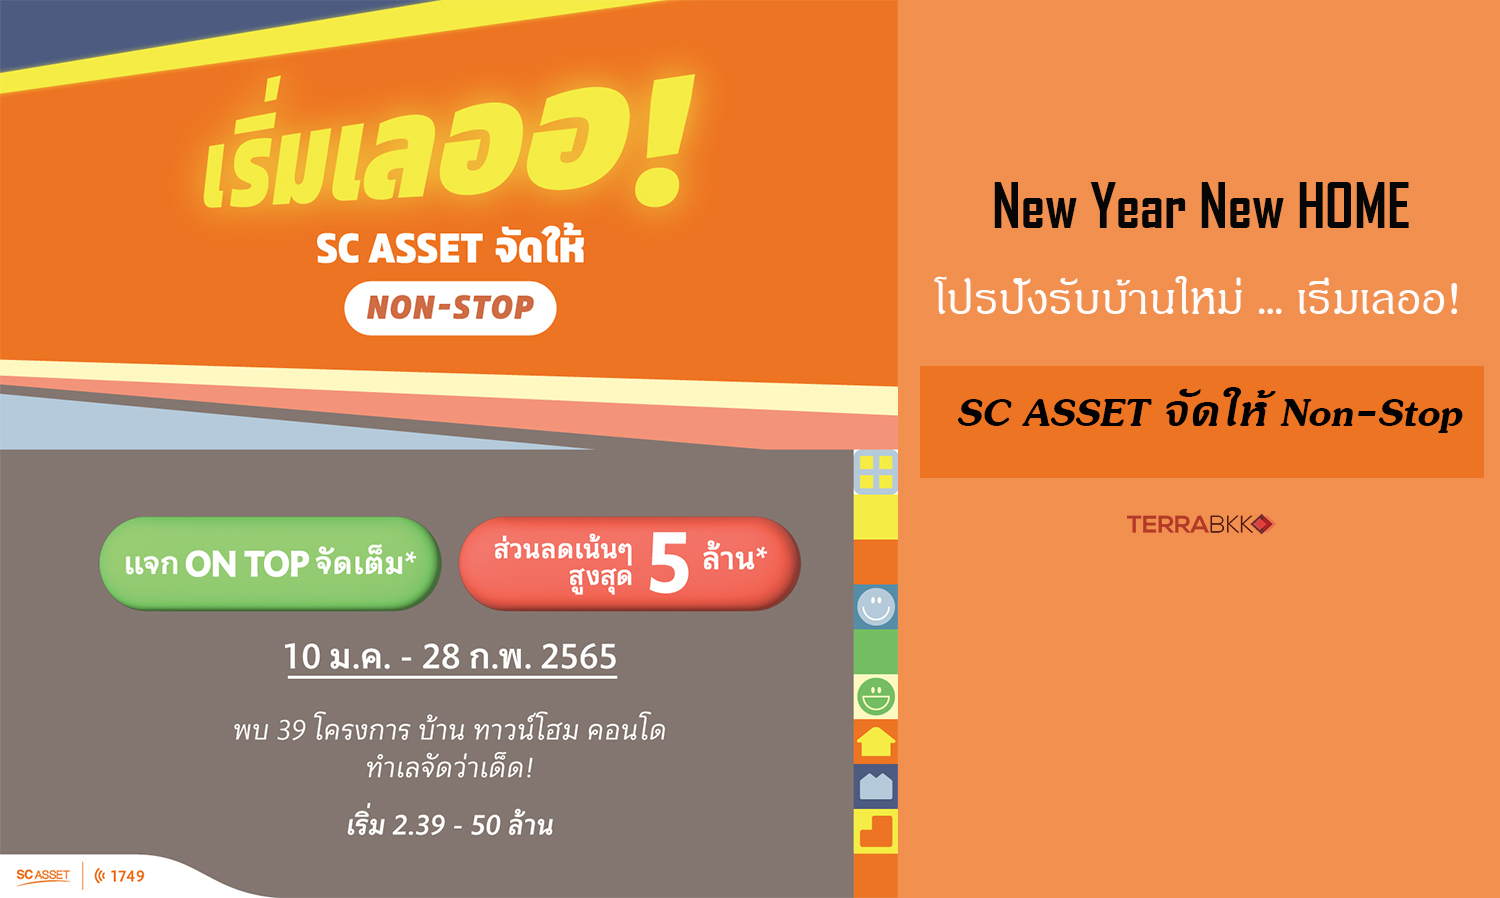 New Year New HOME โปรปังรับบ้านใหม่ … เริ่มเลออ!  SC ASSET จัดให้ Non-Stop